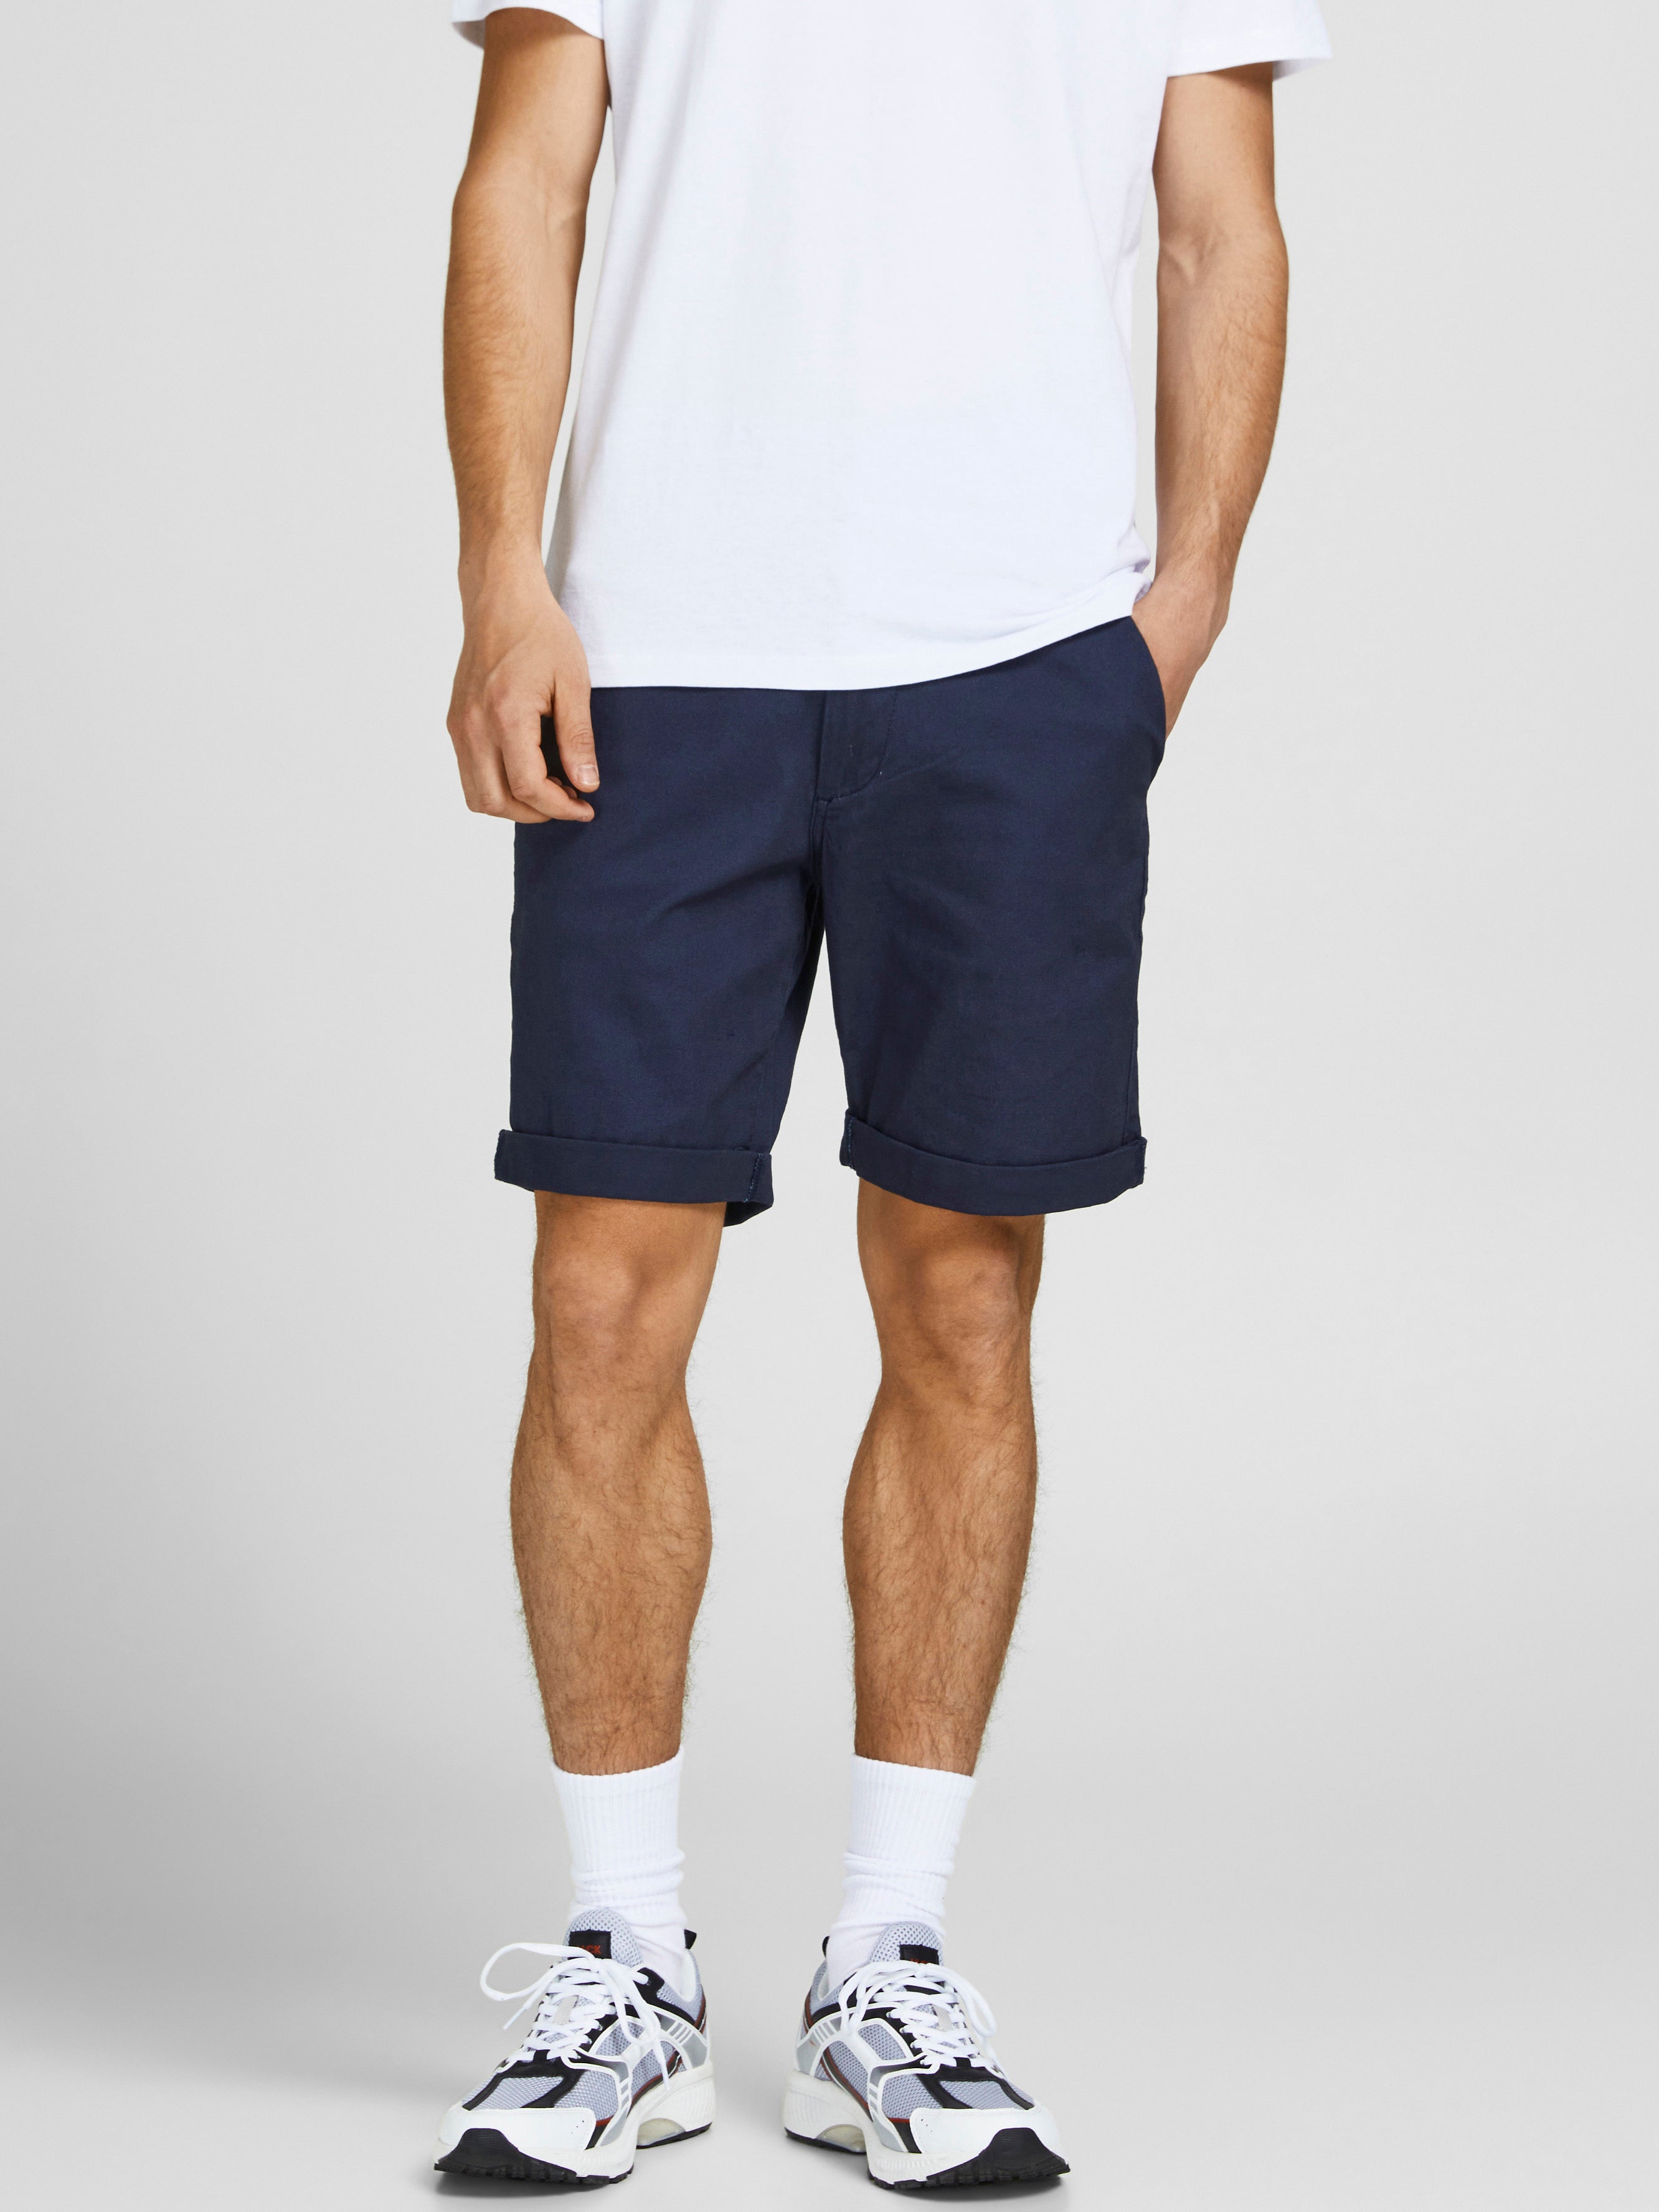 discount 56% MEN FASHION Trousers Shorts Blue M Jack & Jones Jack & Jones shorts 